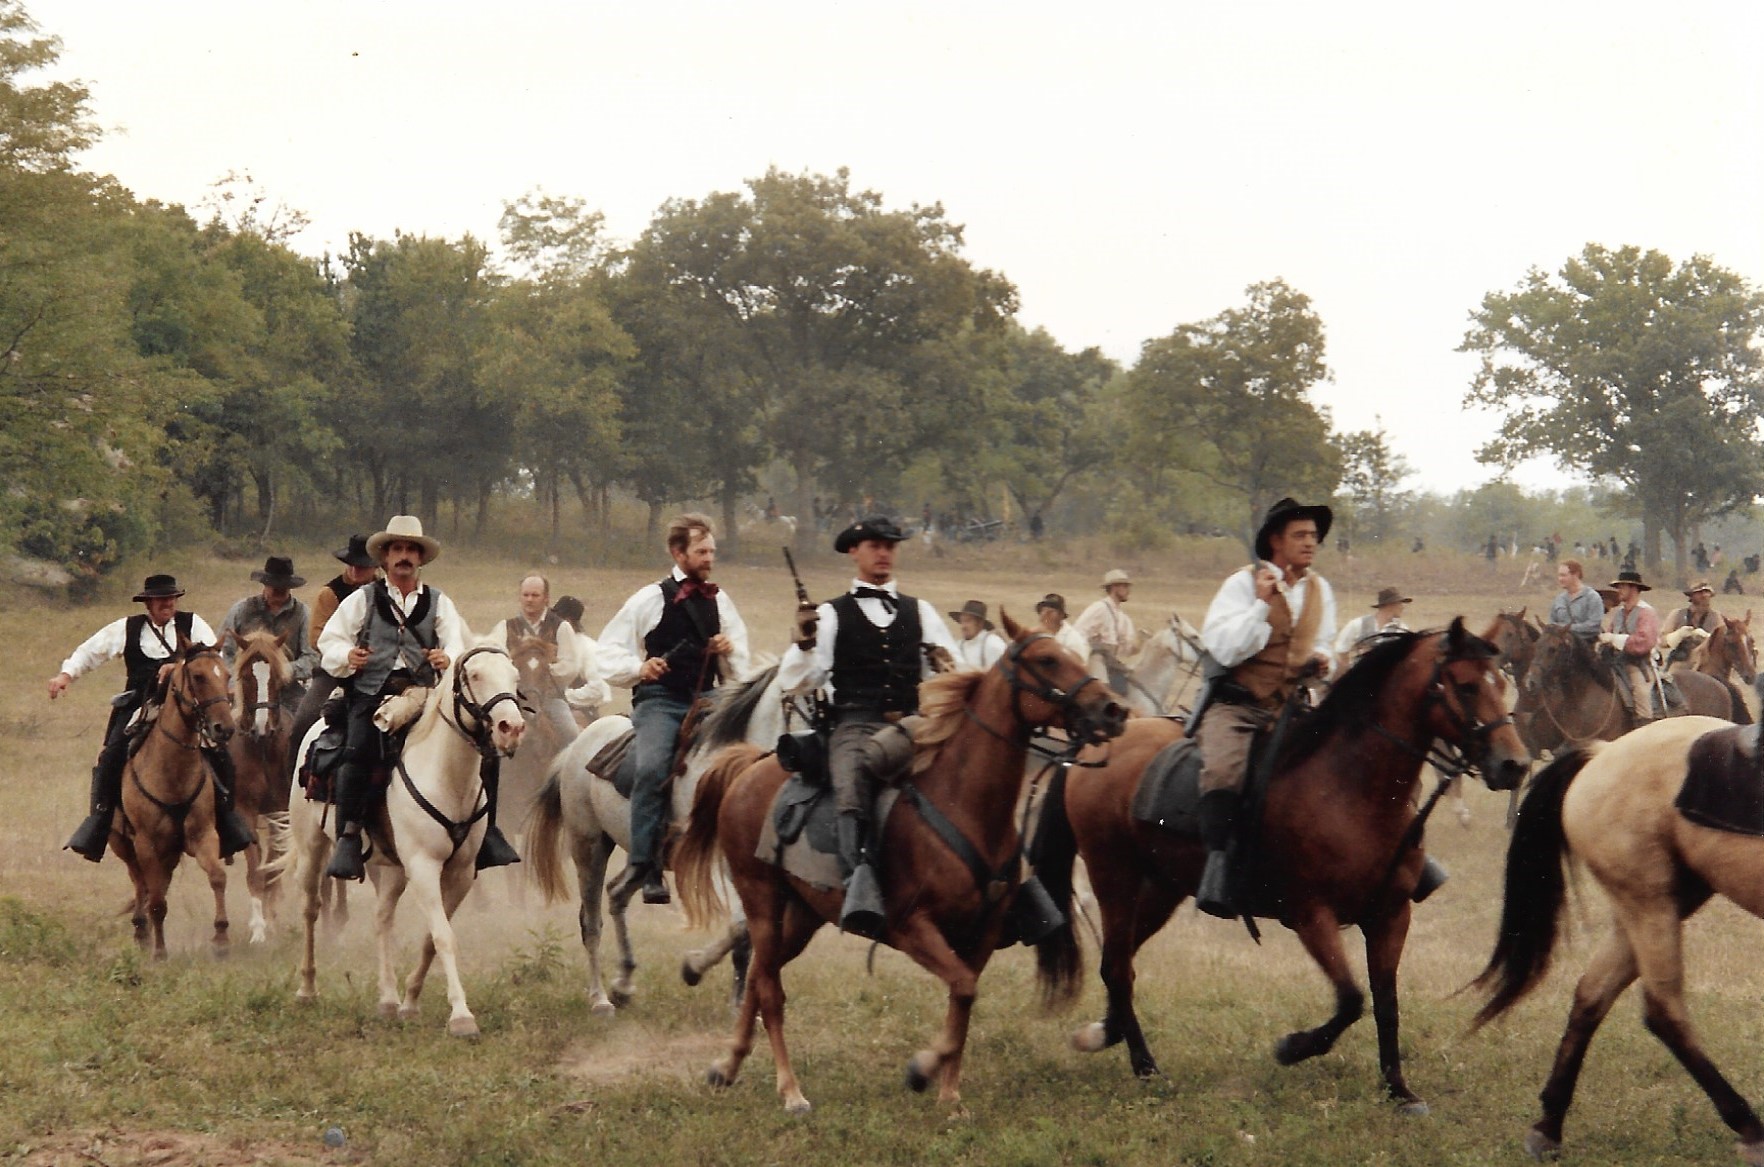 Men on horseback dressed in civil war attire